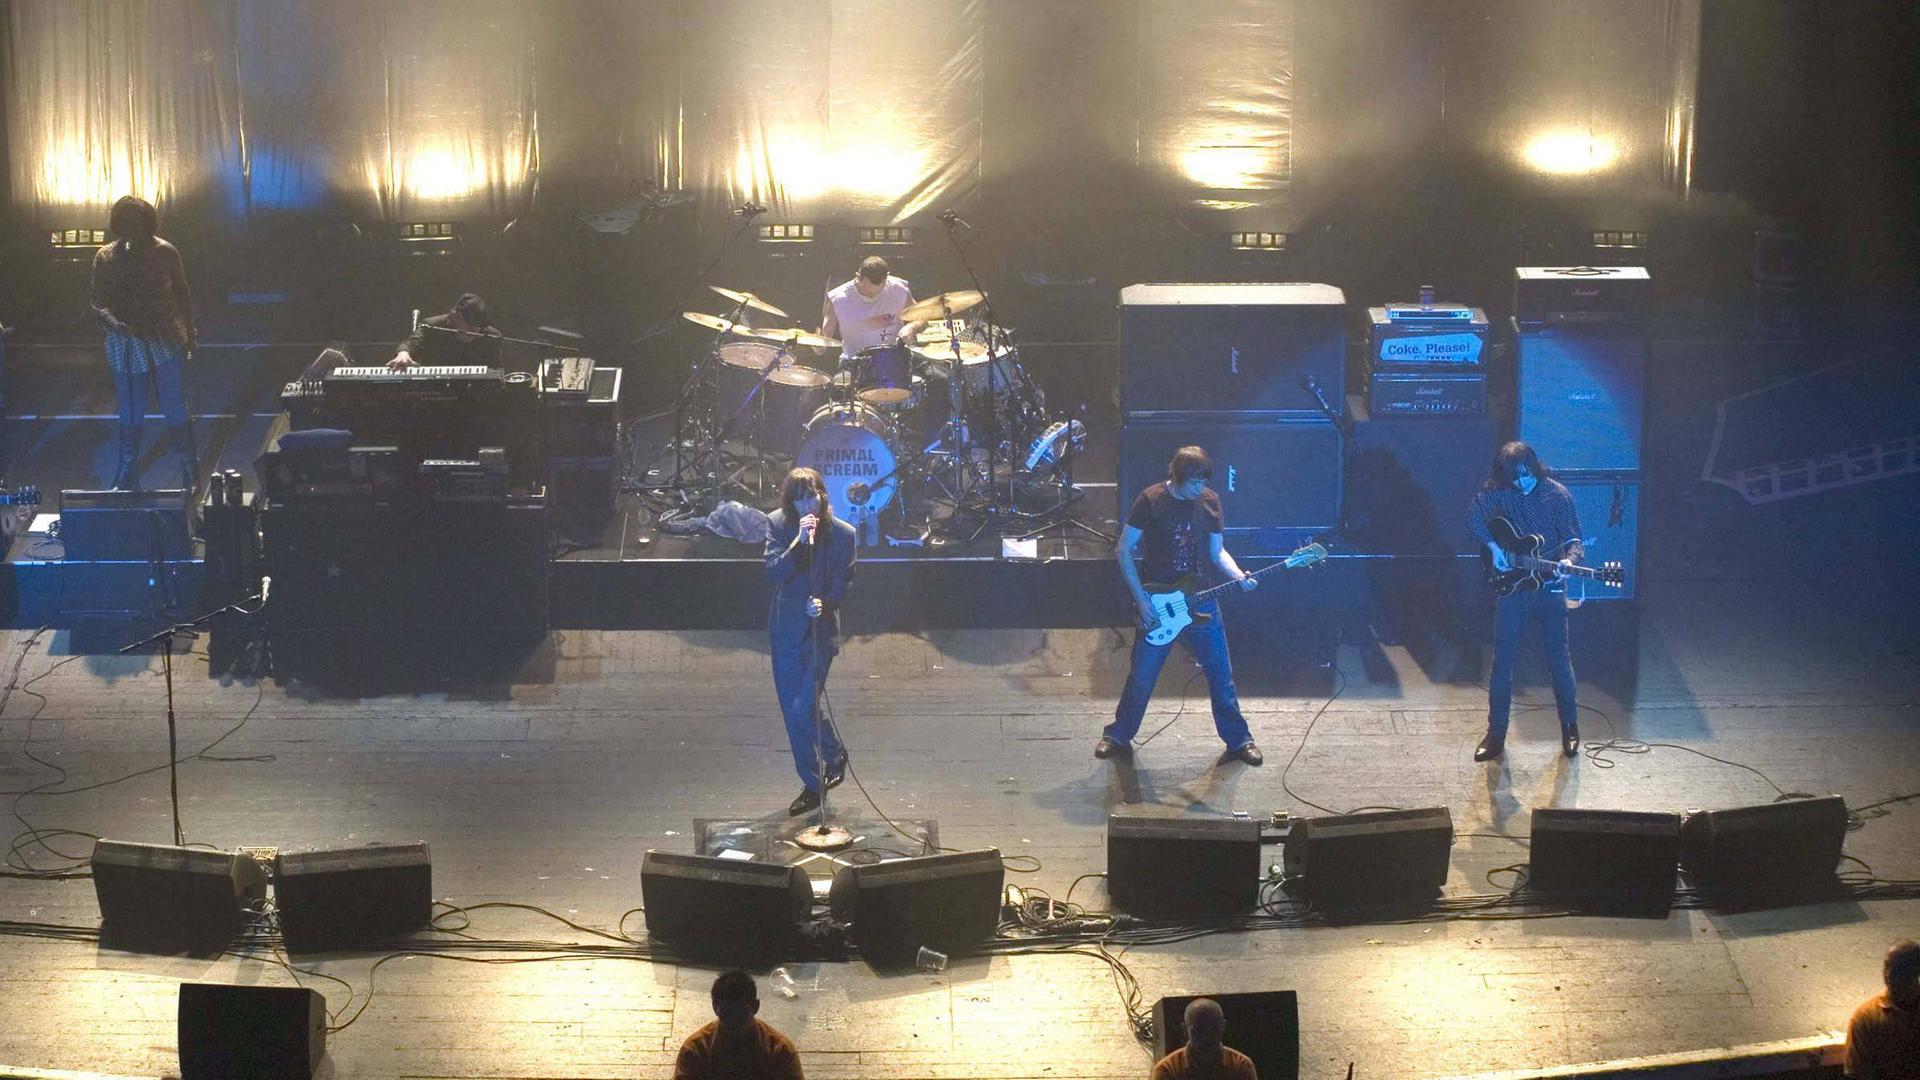 Die Band "Primal Scream" live on stage.